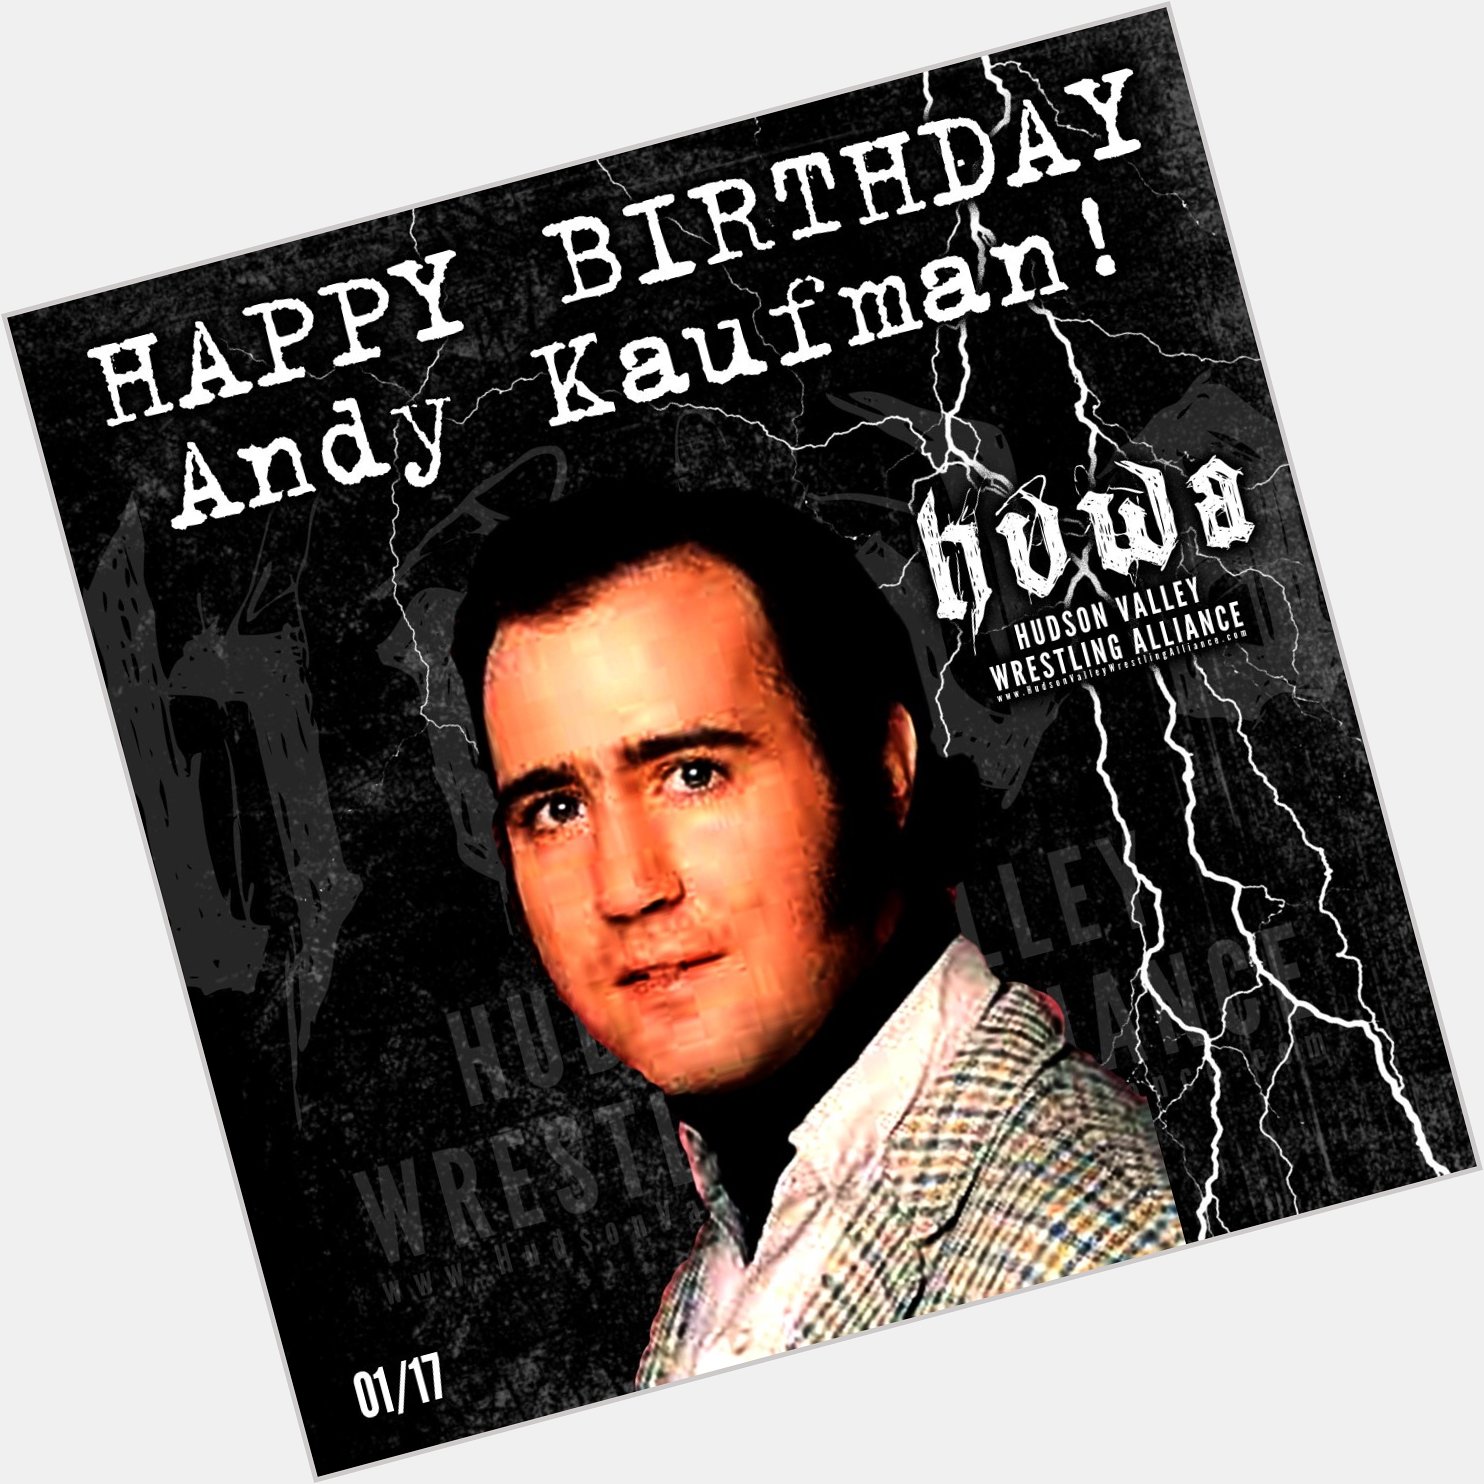 Happy Birthday Andy Kaufman!!  